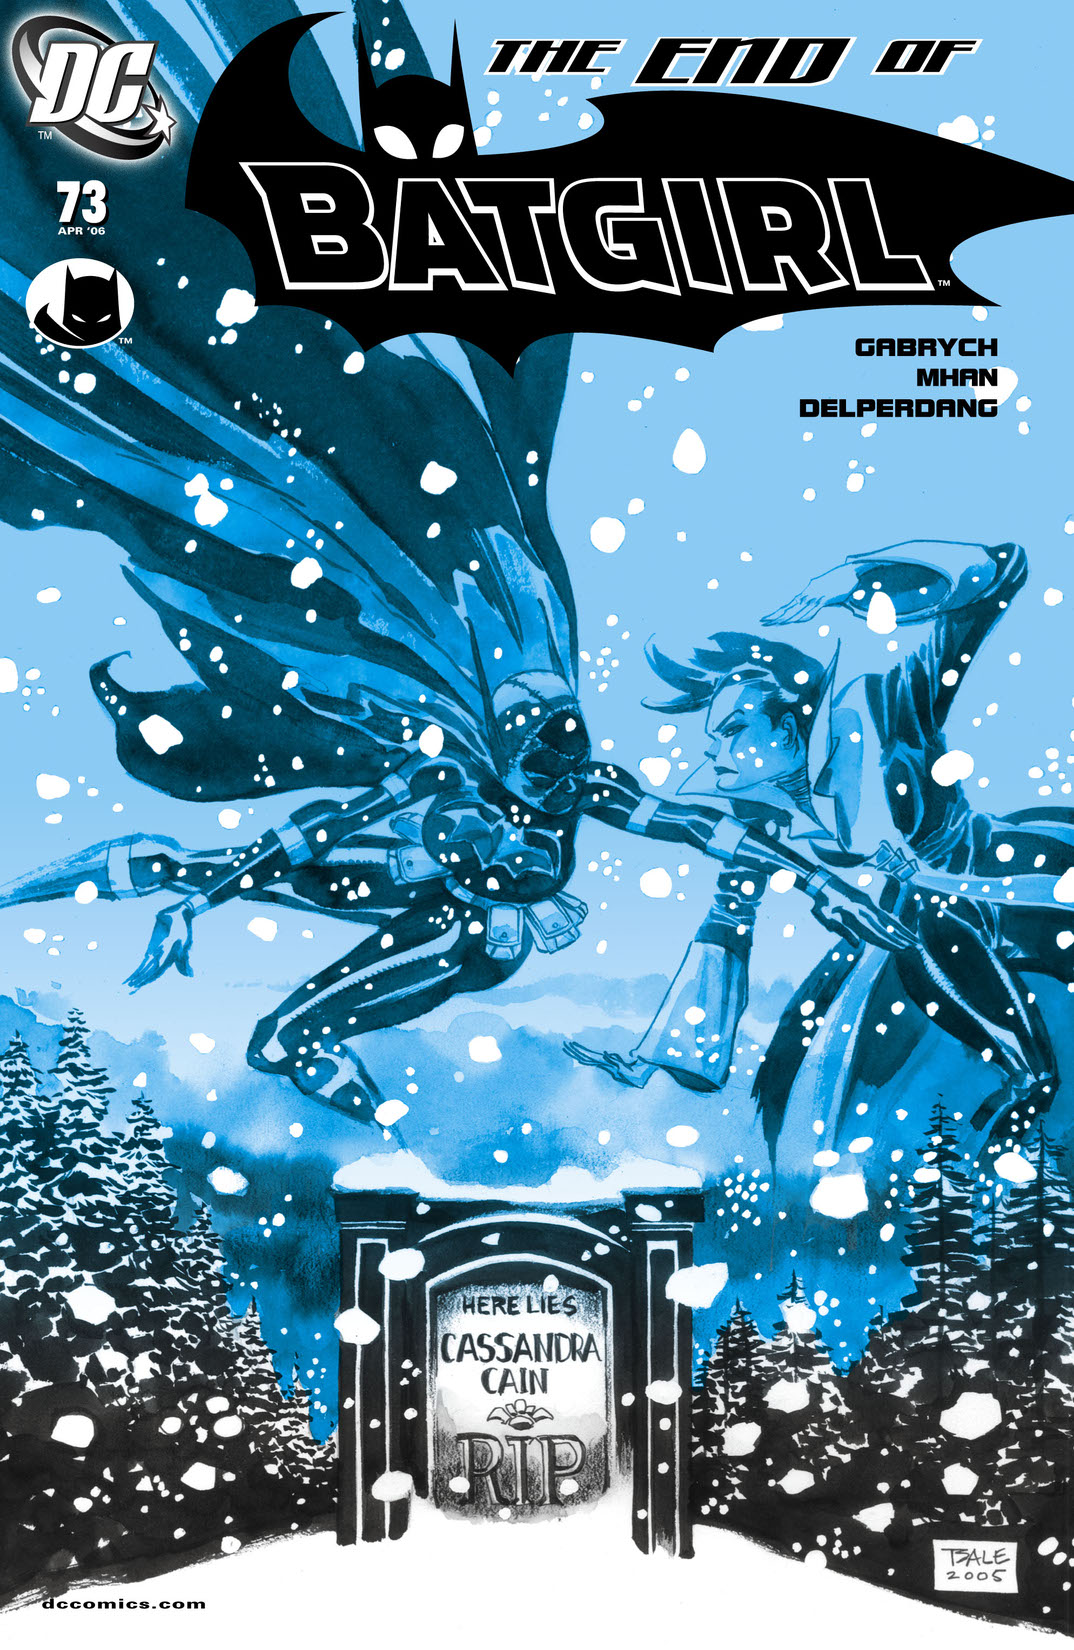 Batgirl (2000-) #73 preview images